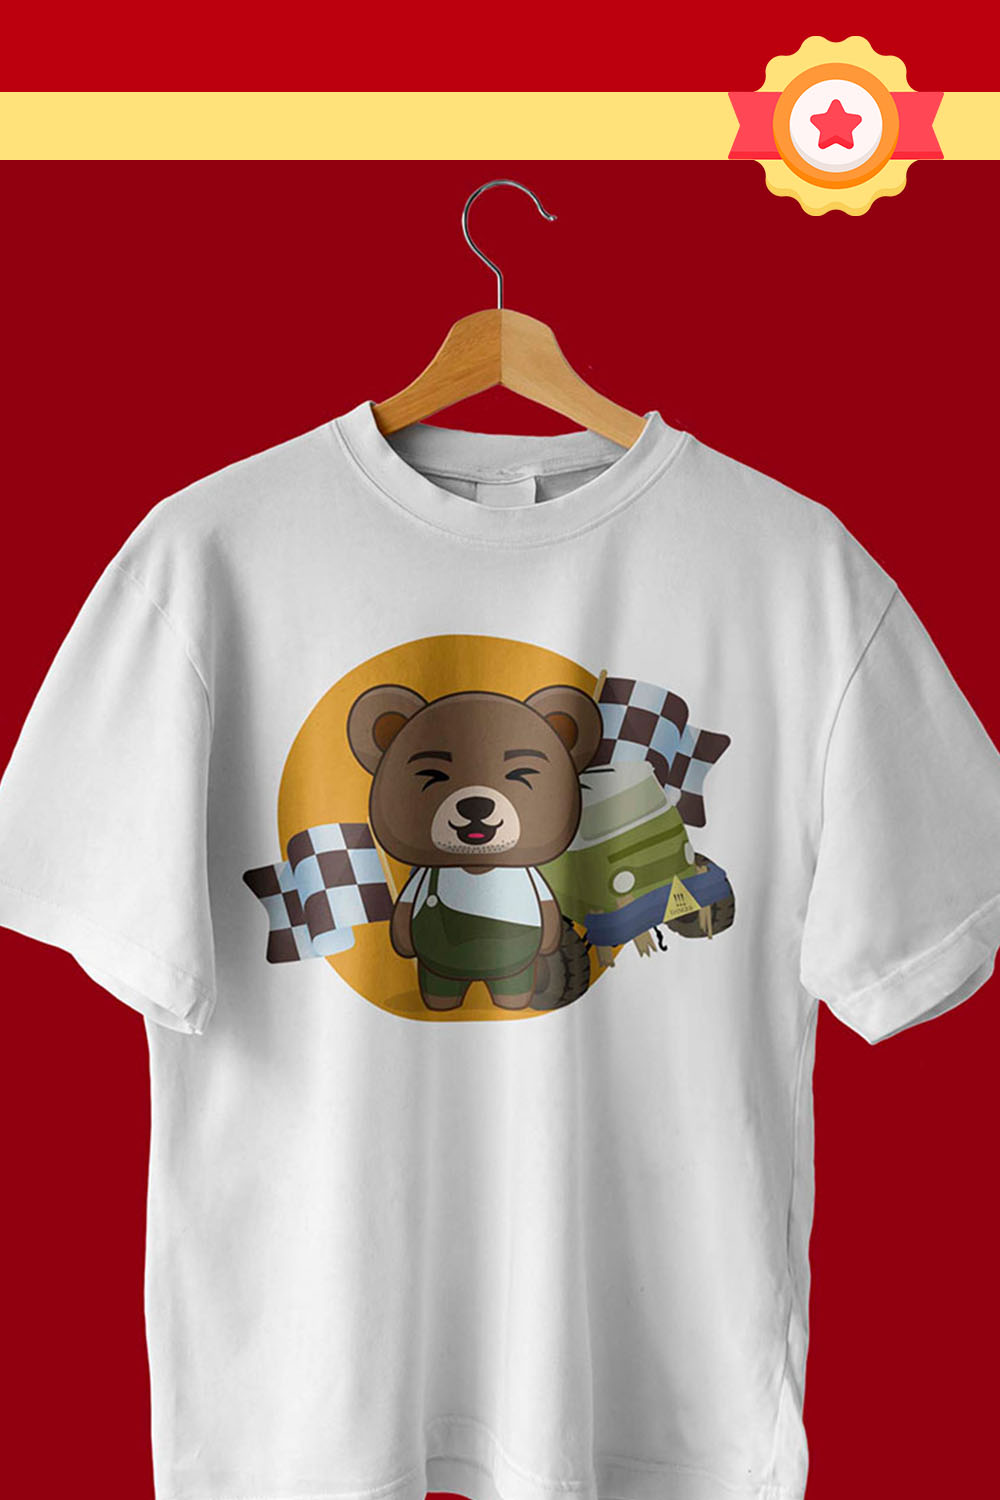 Cute Bear Illustration T-shirt Pinterest image.